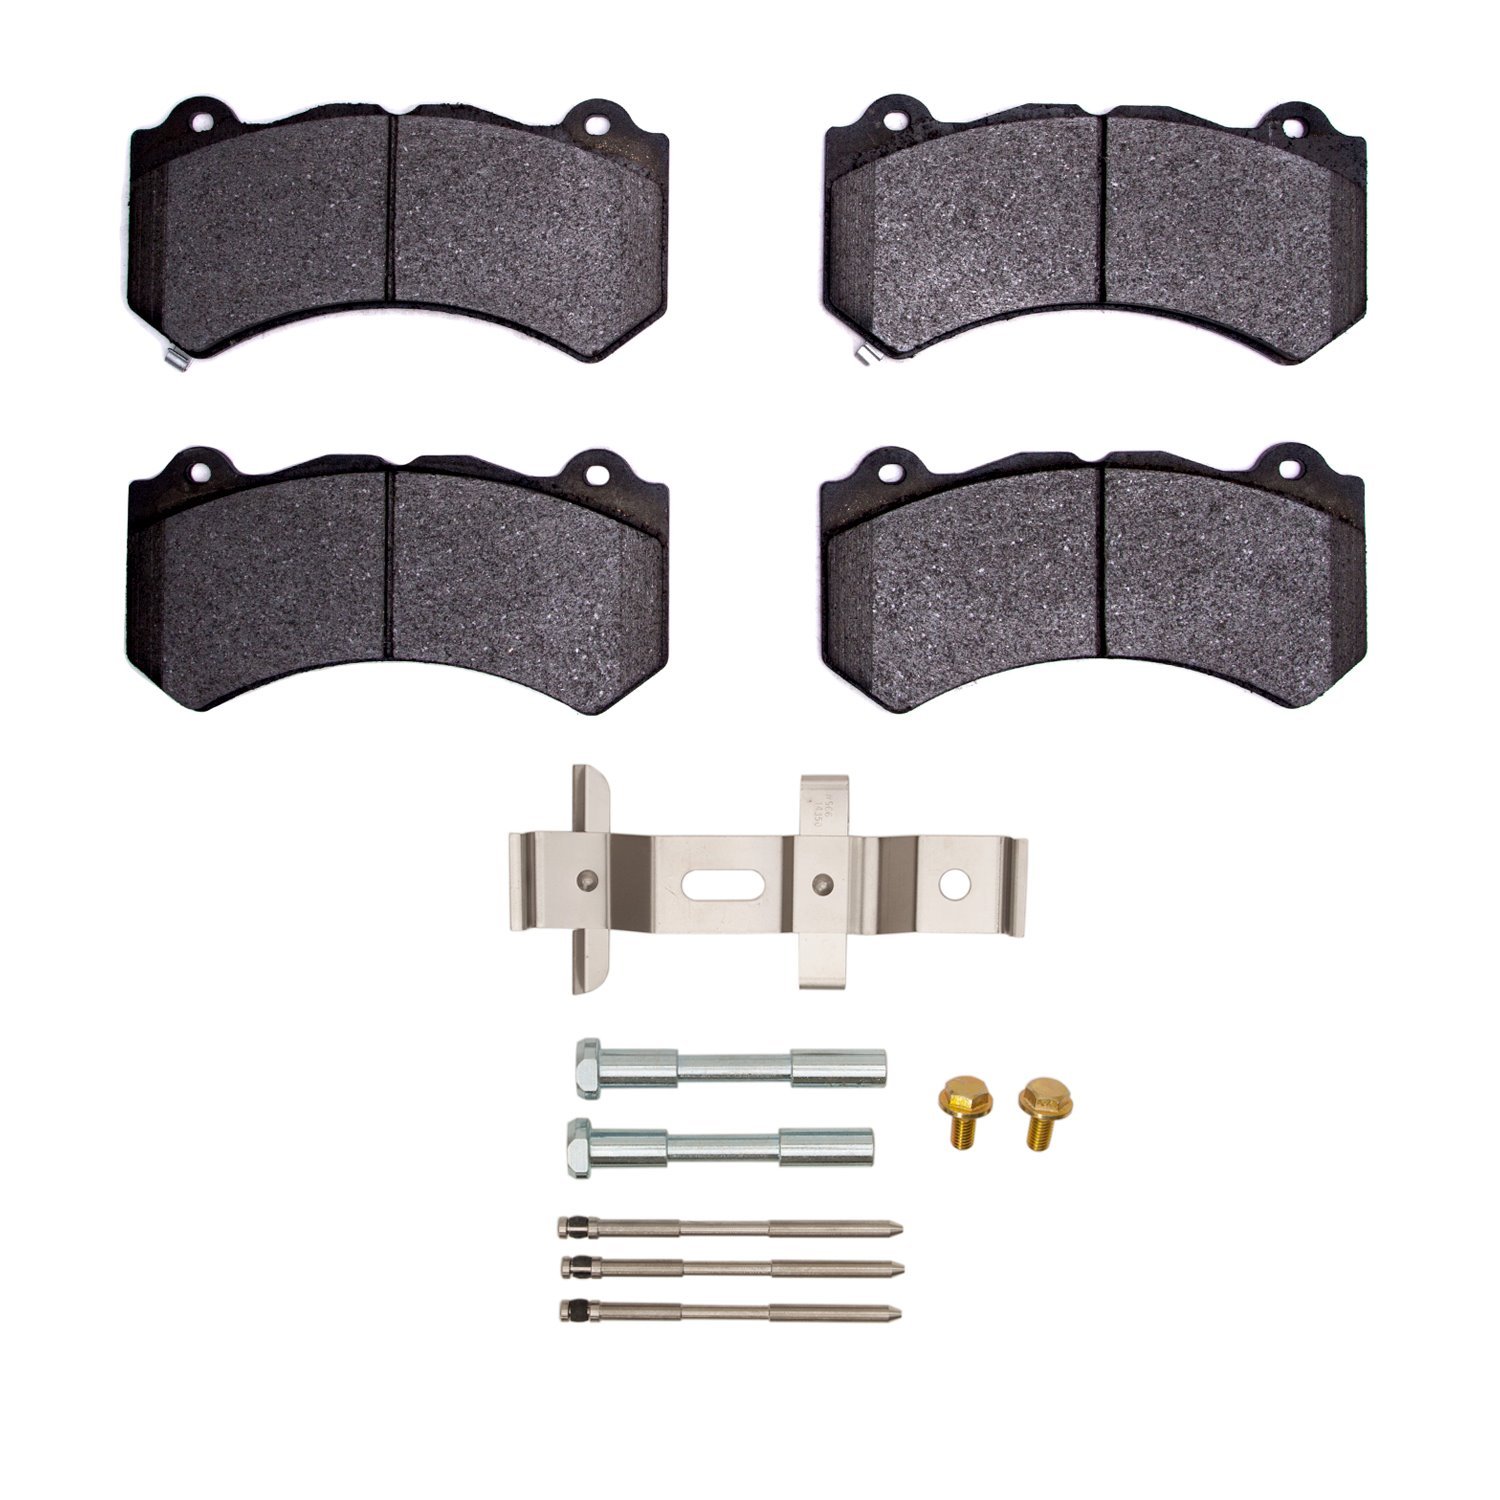 Performance Sport Brake Pads & Hardware Kit, Fits Select Fits Multiple Makes/Models, Position: Front